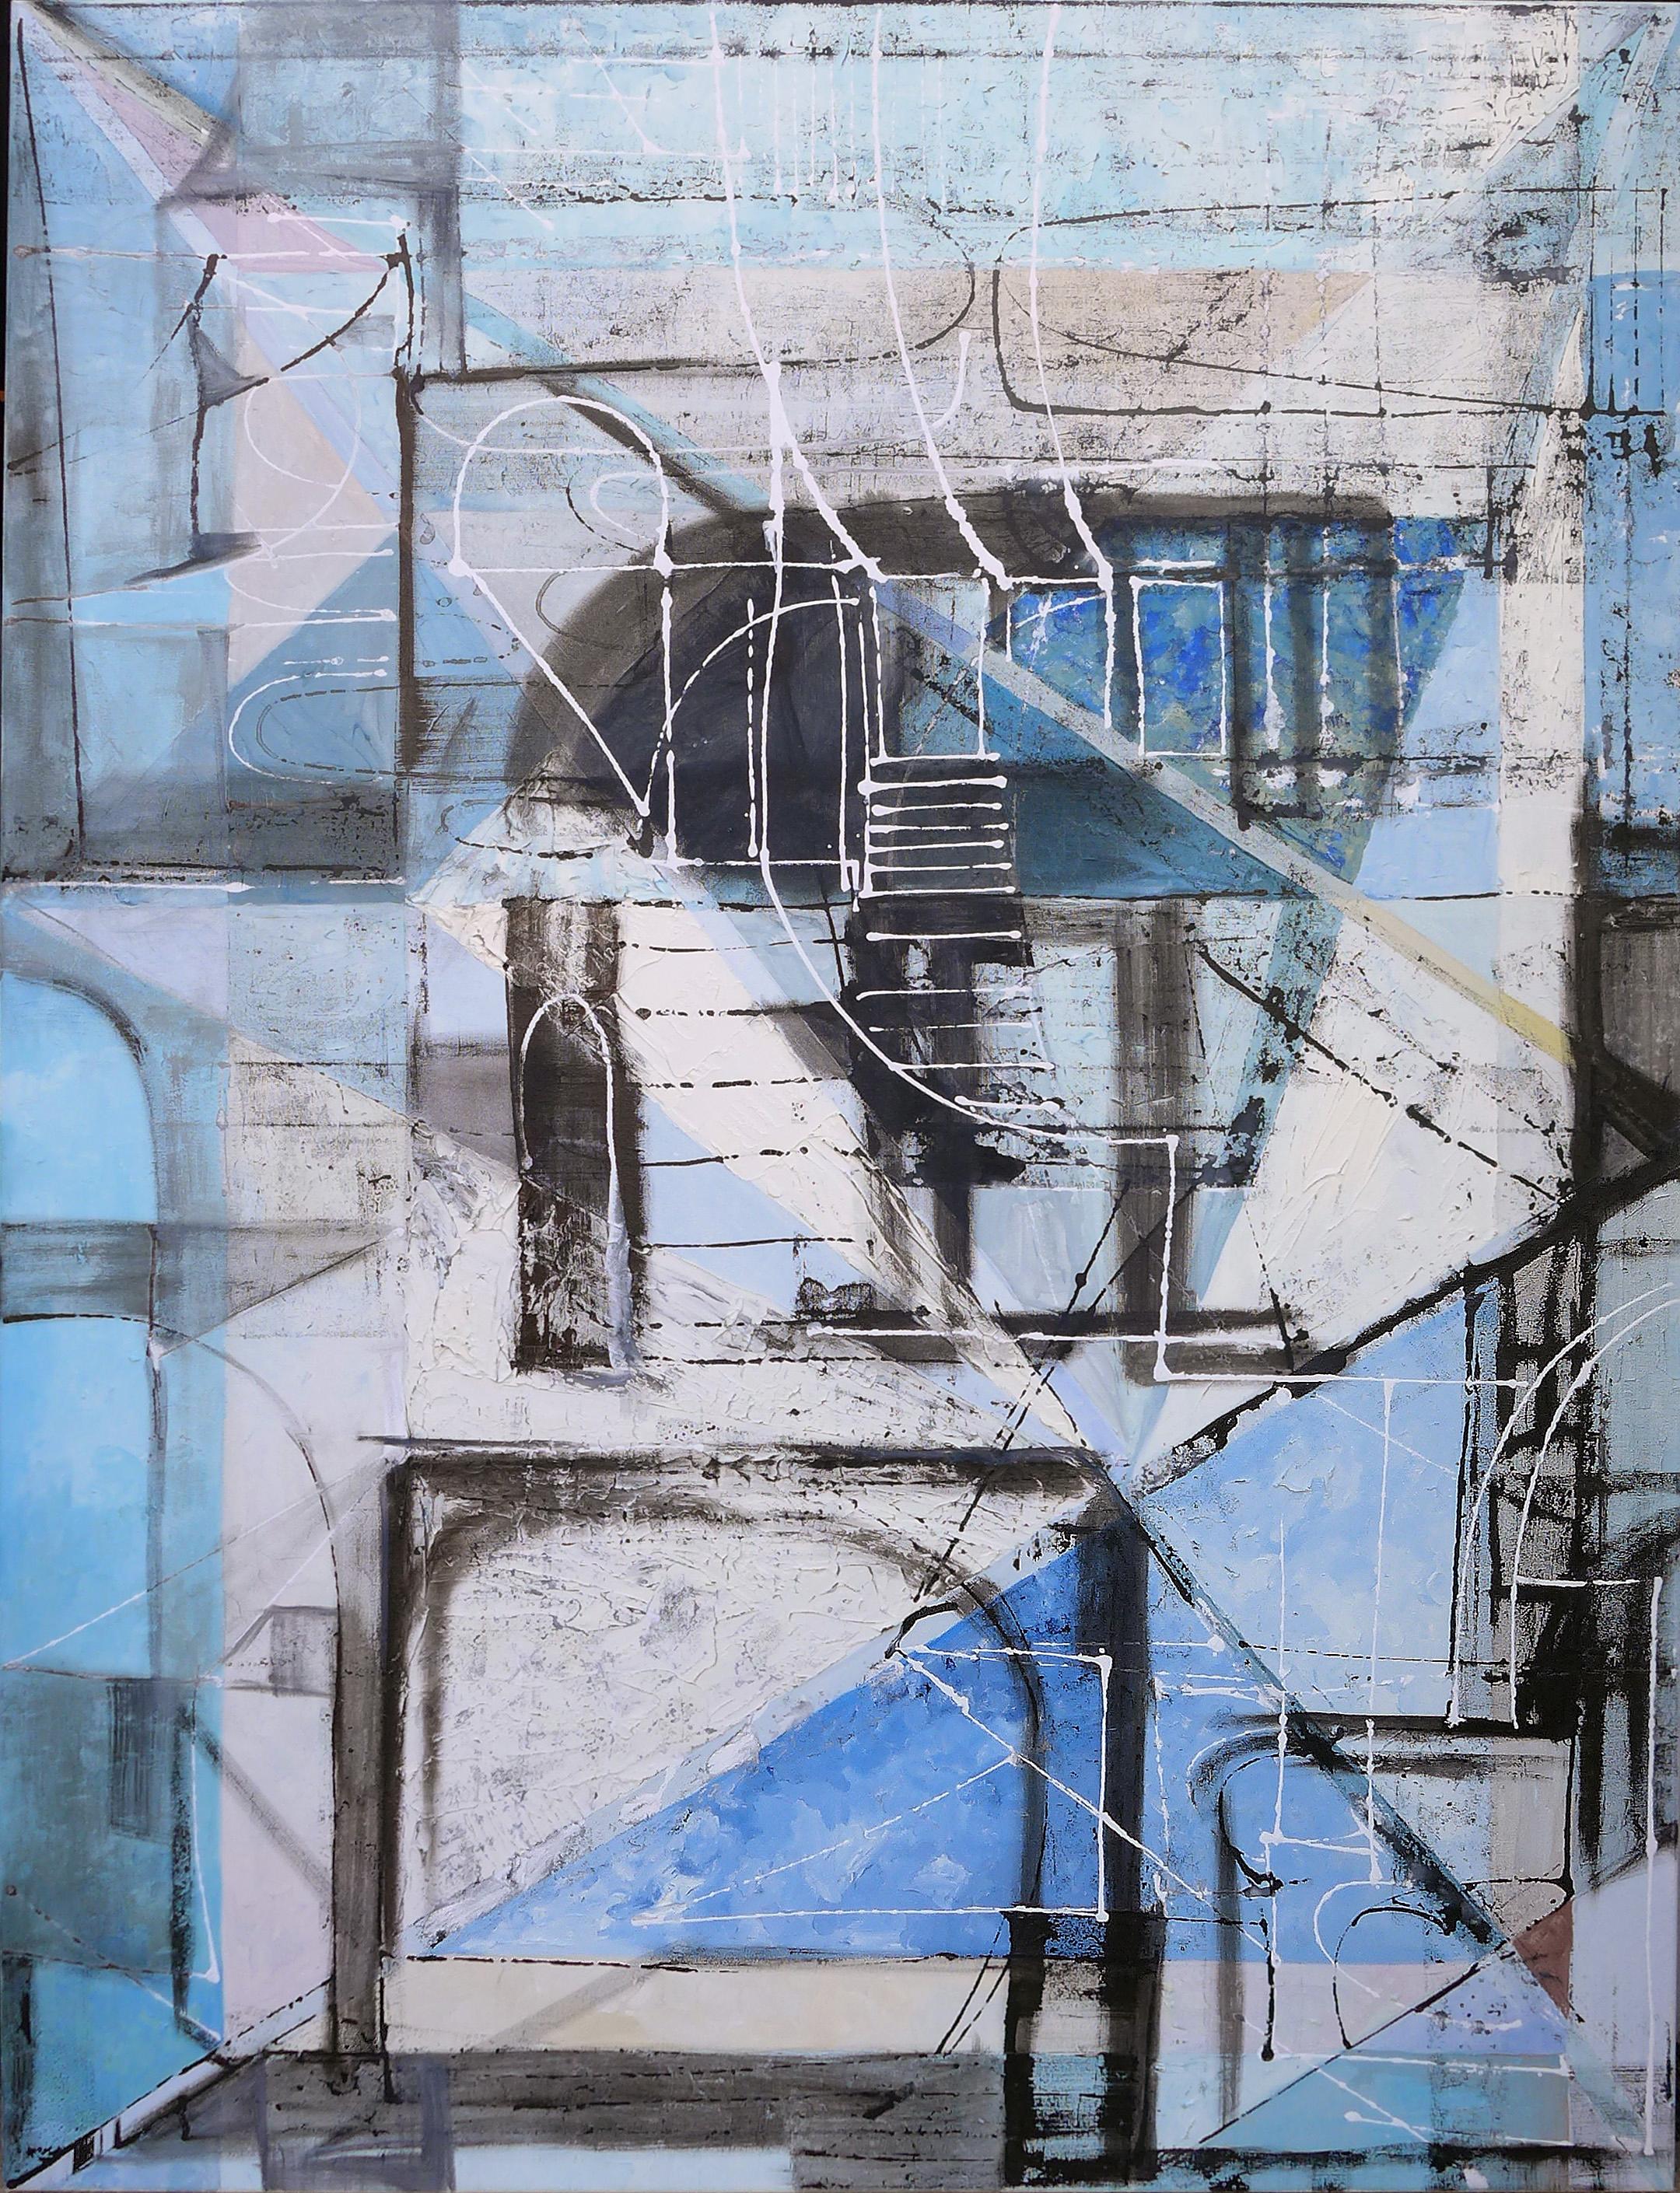 Interior Painting Anna Sudbina - Lost City Blues 01 - Grande peinture expressionniste abstraite contemporaine en bleu